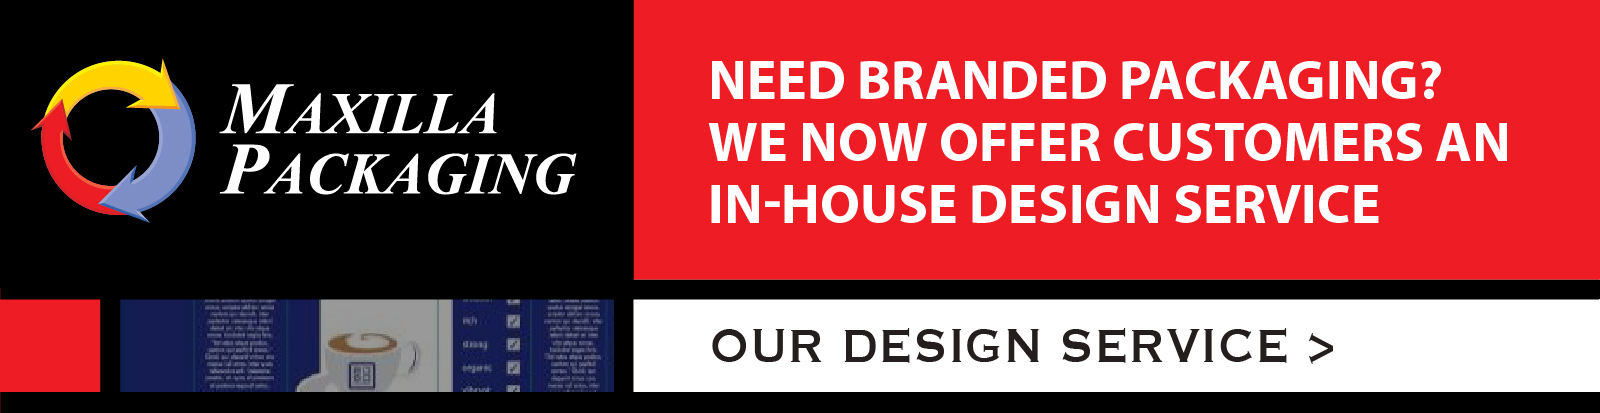 our design service banner